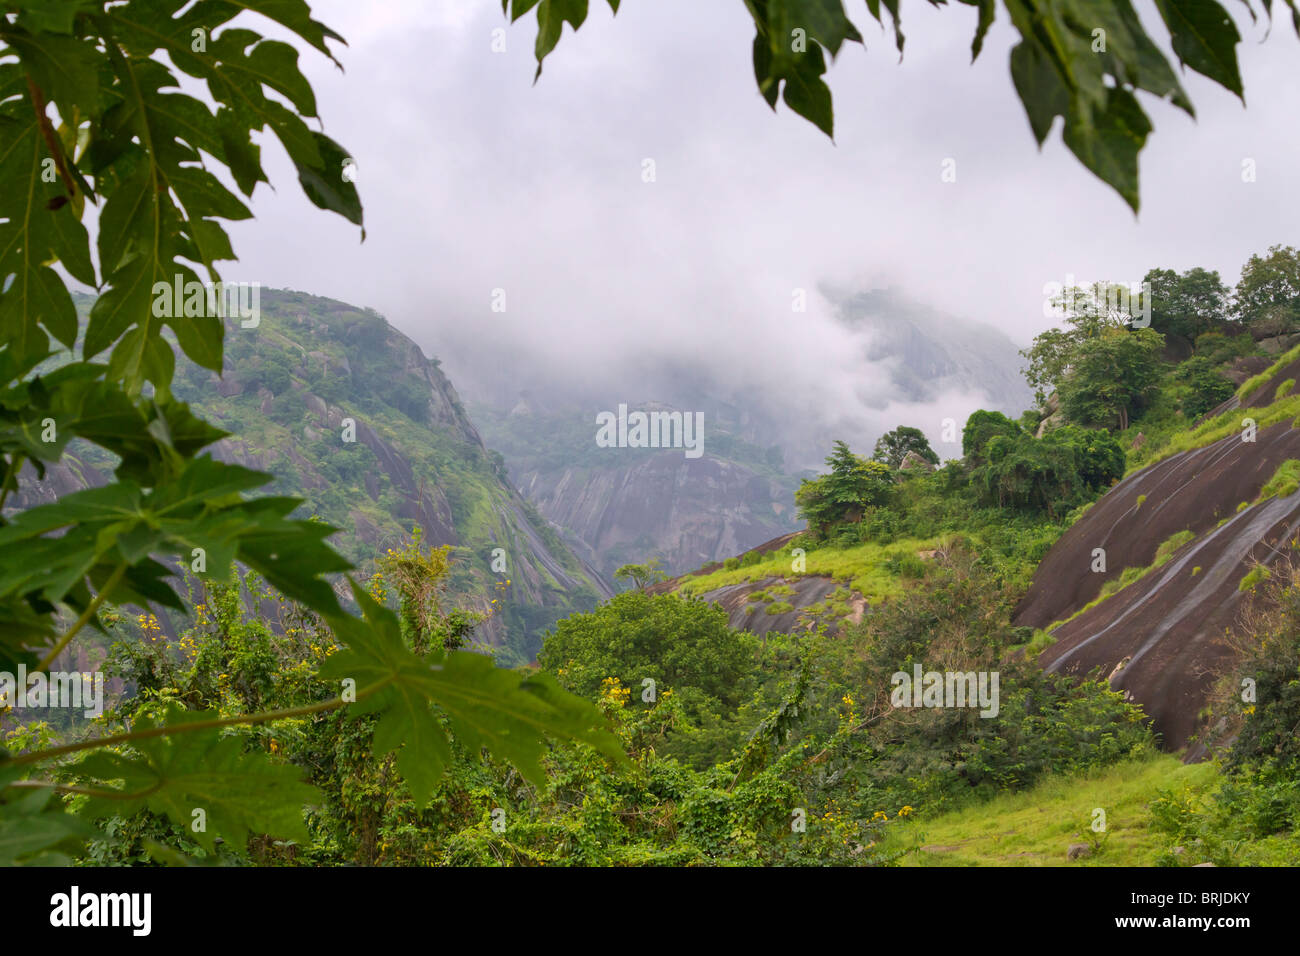 A mountain rain forest, Idanre, Ondo state, Nigeria. Stock Photo